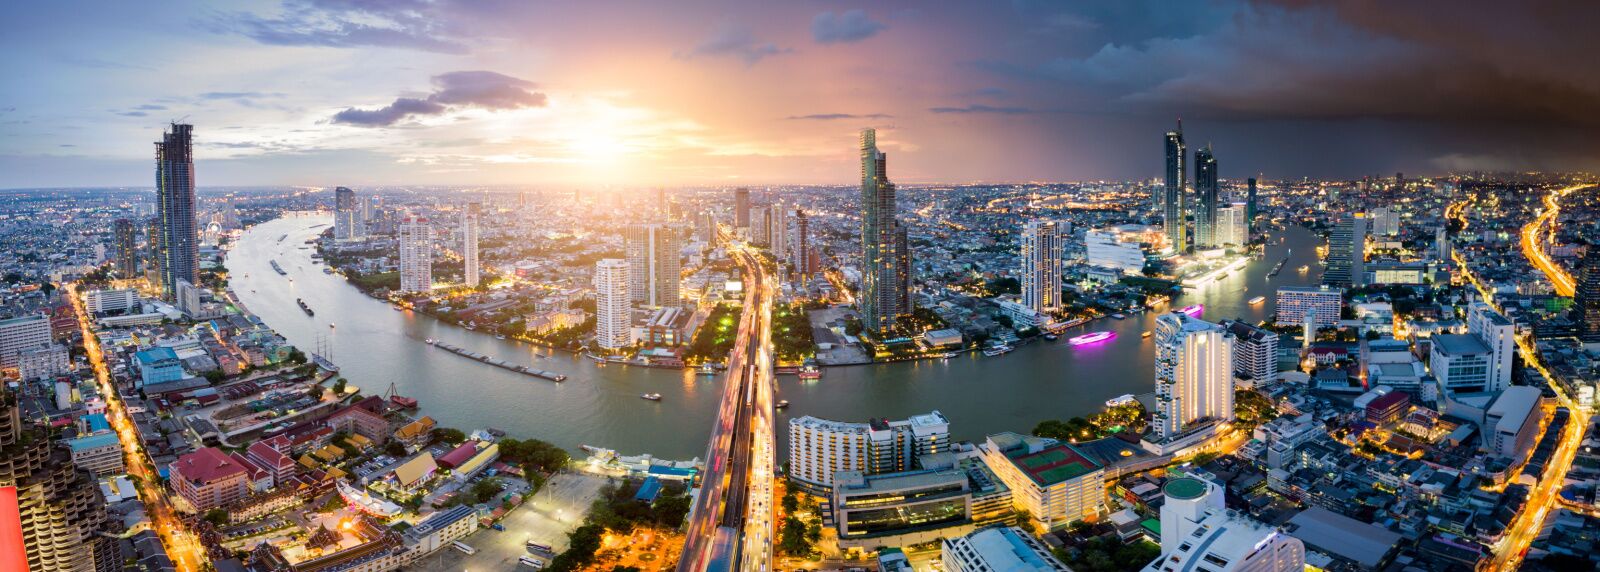 skyline of bangkok at night